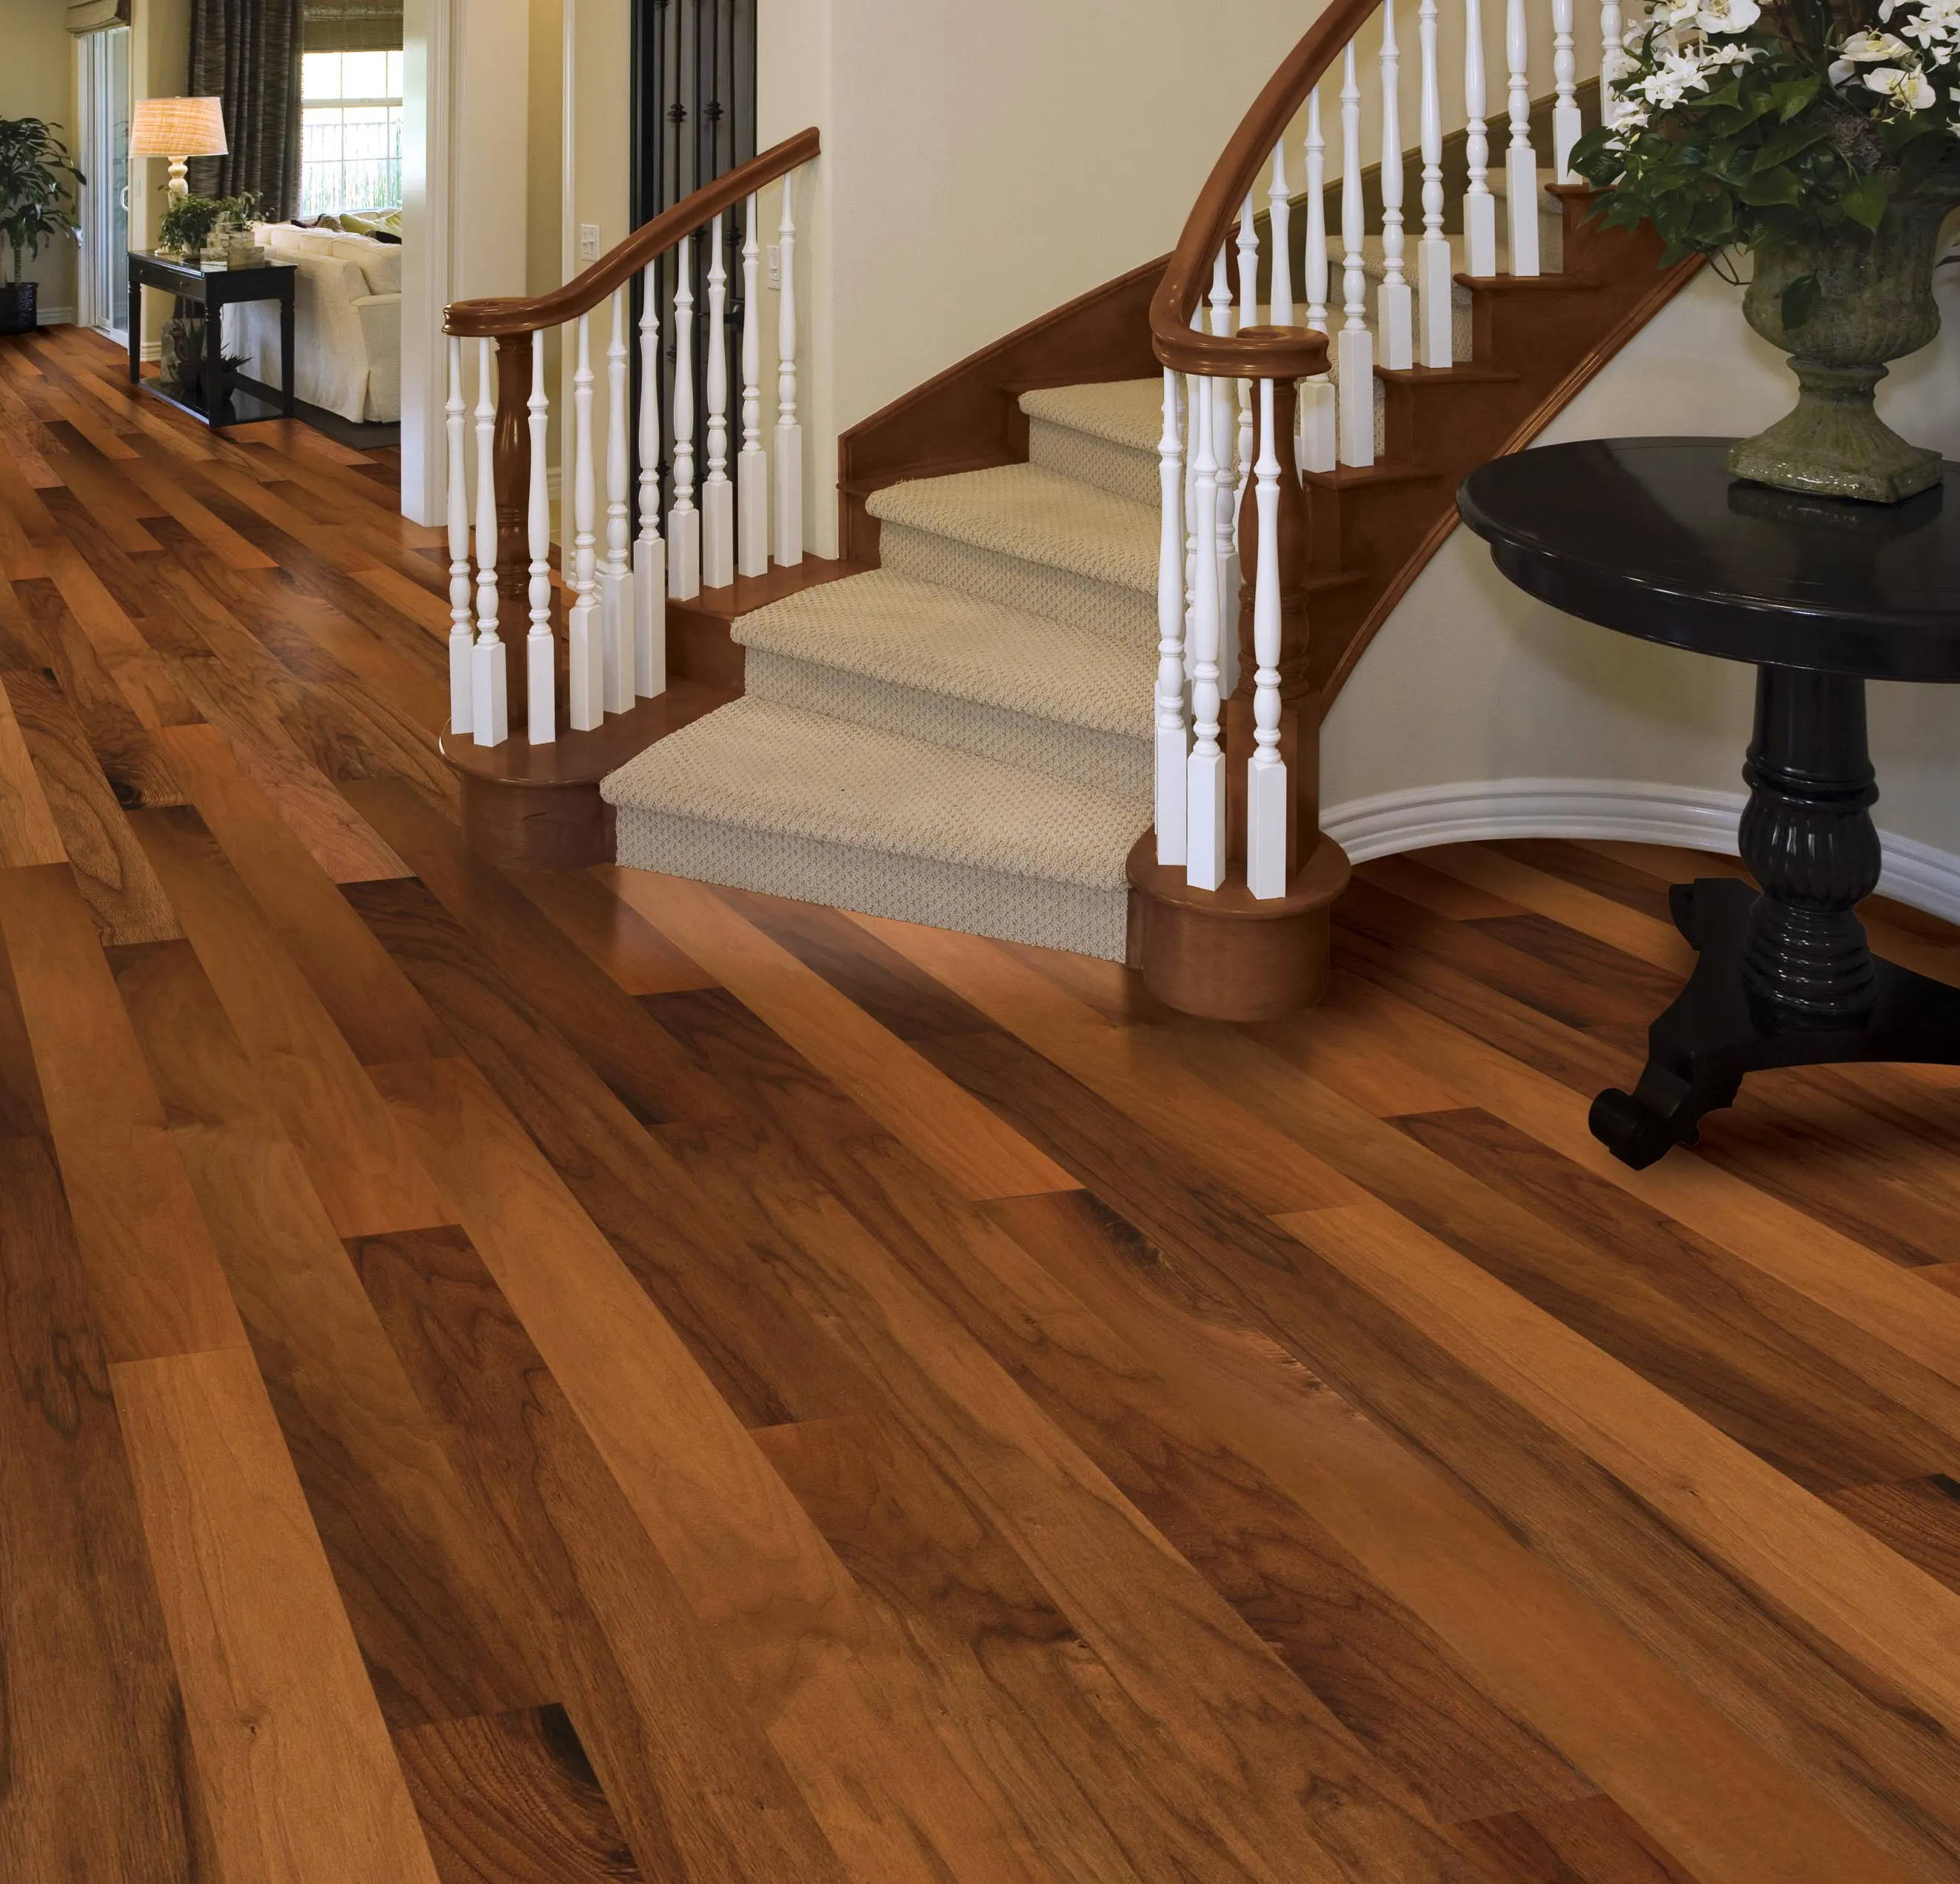 Hardwood Flooring Increase, Images Of Hardwood Floors